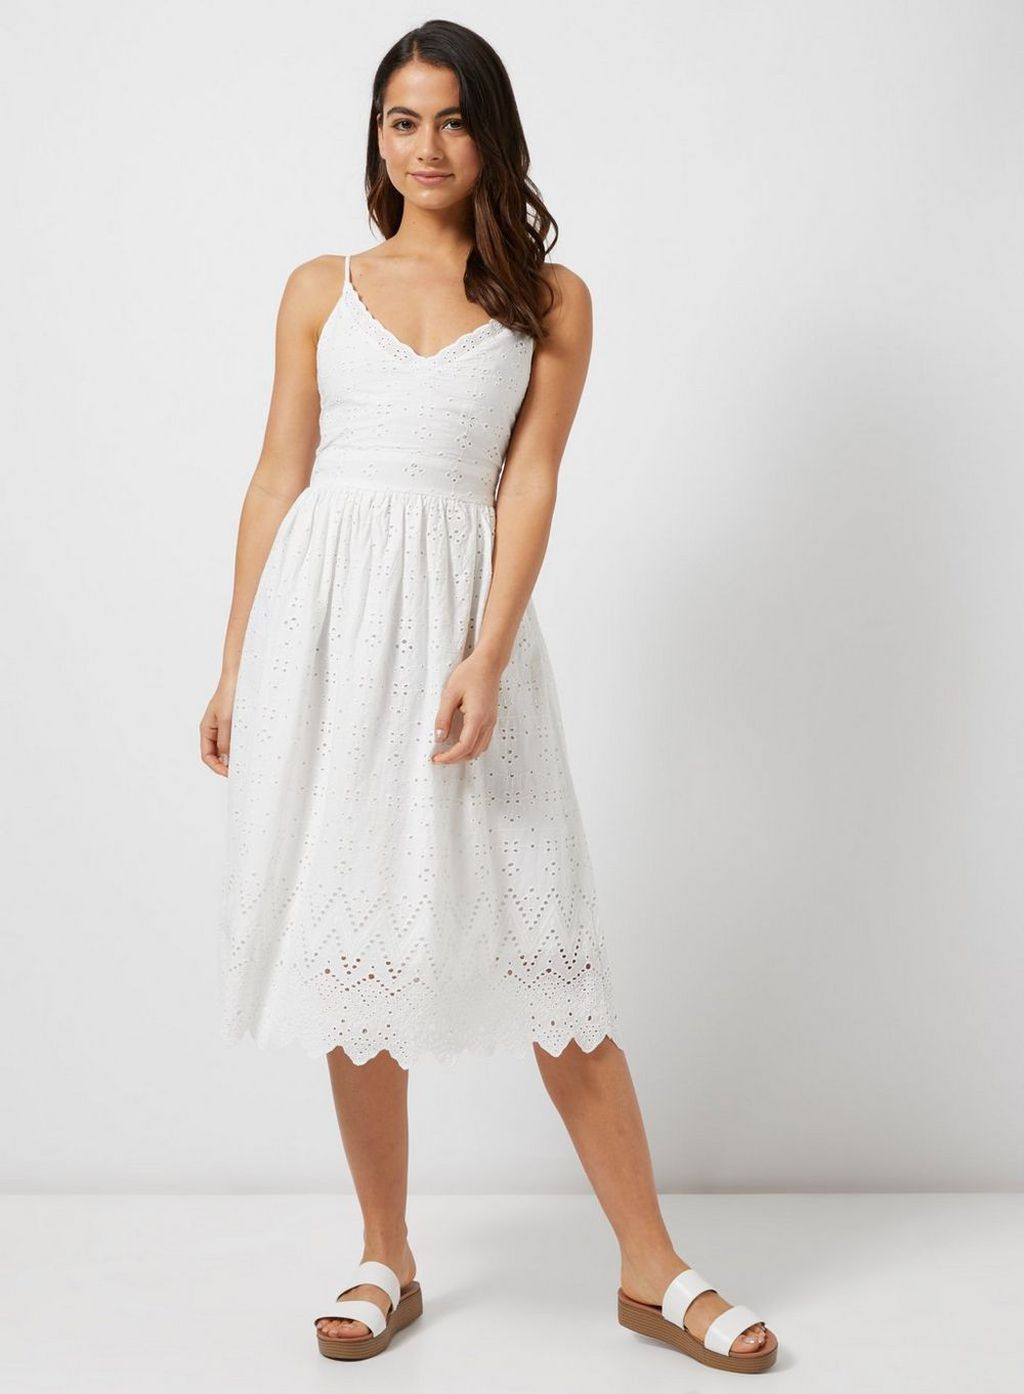 Bijela haljina midi kroja, 28,50 funti